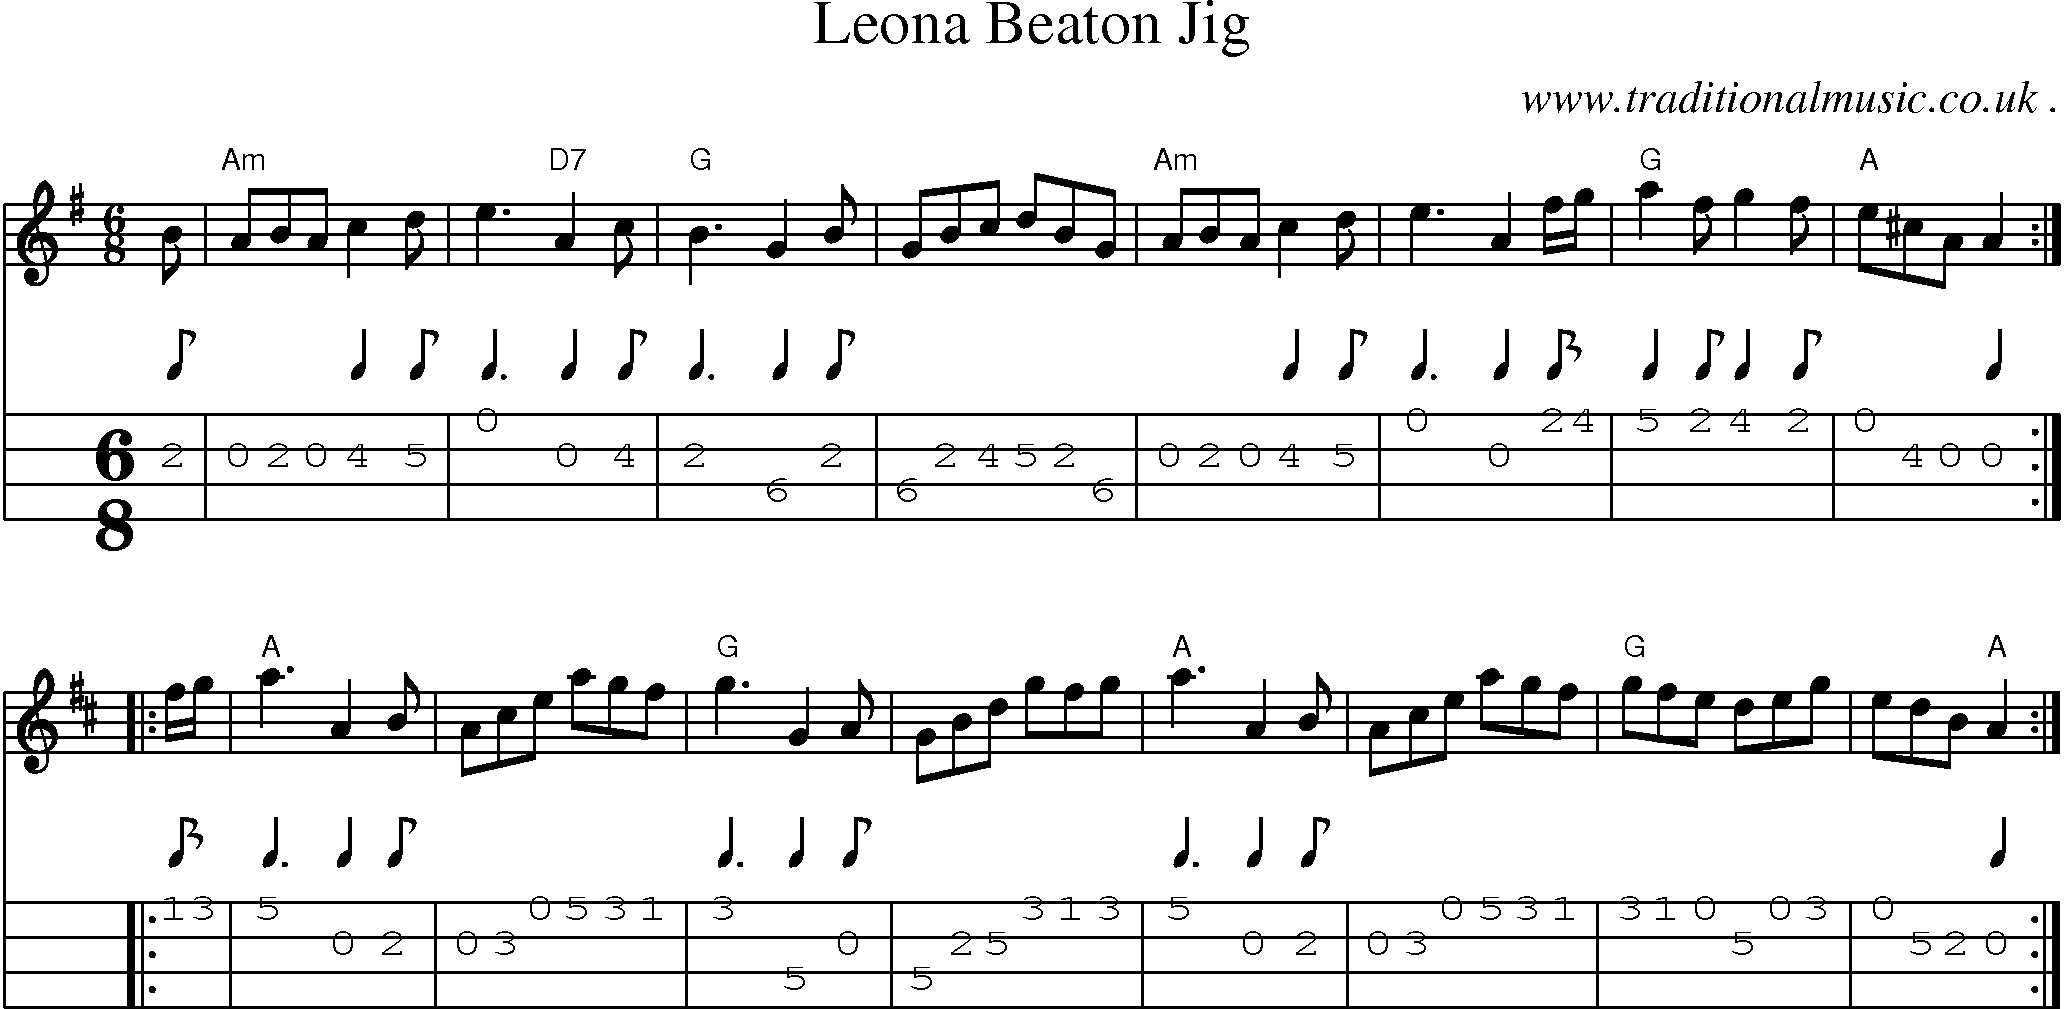 Sheet-music  score, Chords and Mandolin Tabs for Leona Beaton Jig